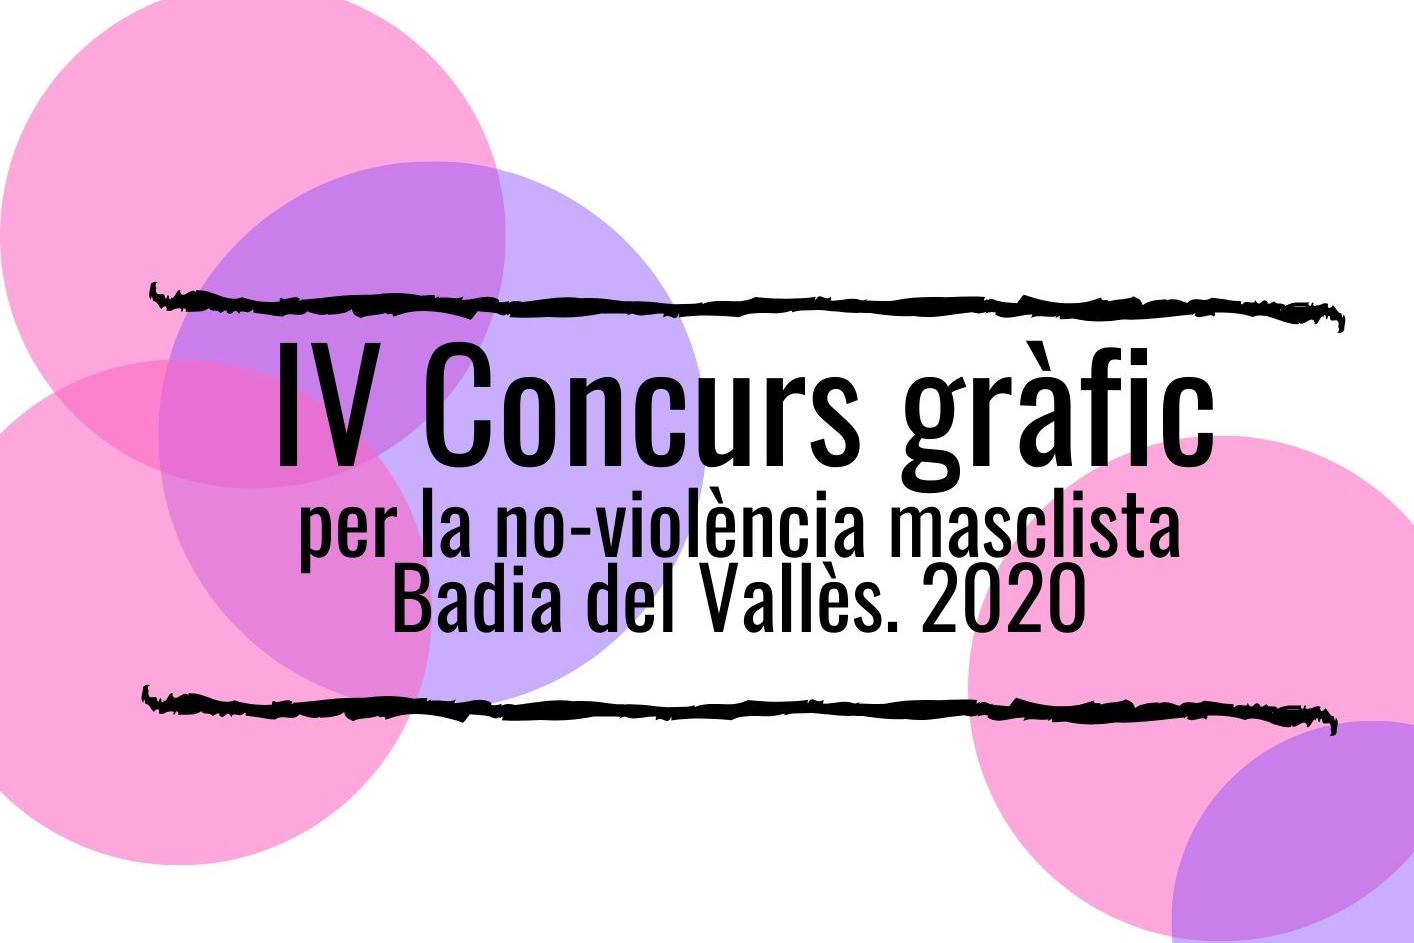 IV Concurs grfic per la no-violncia masclista